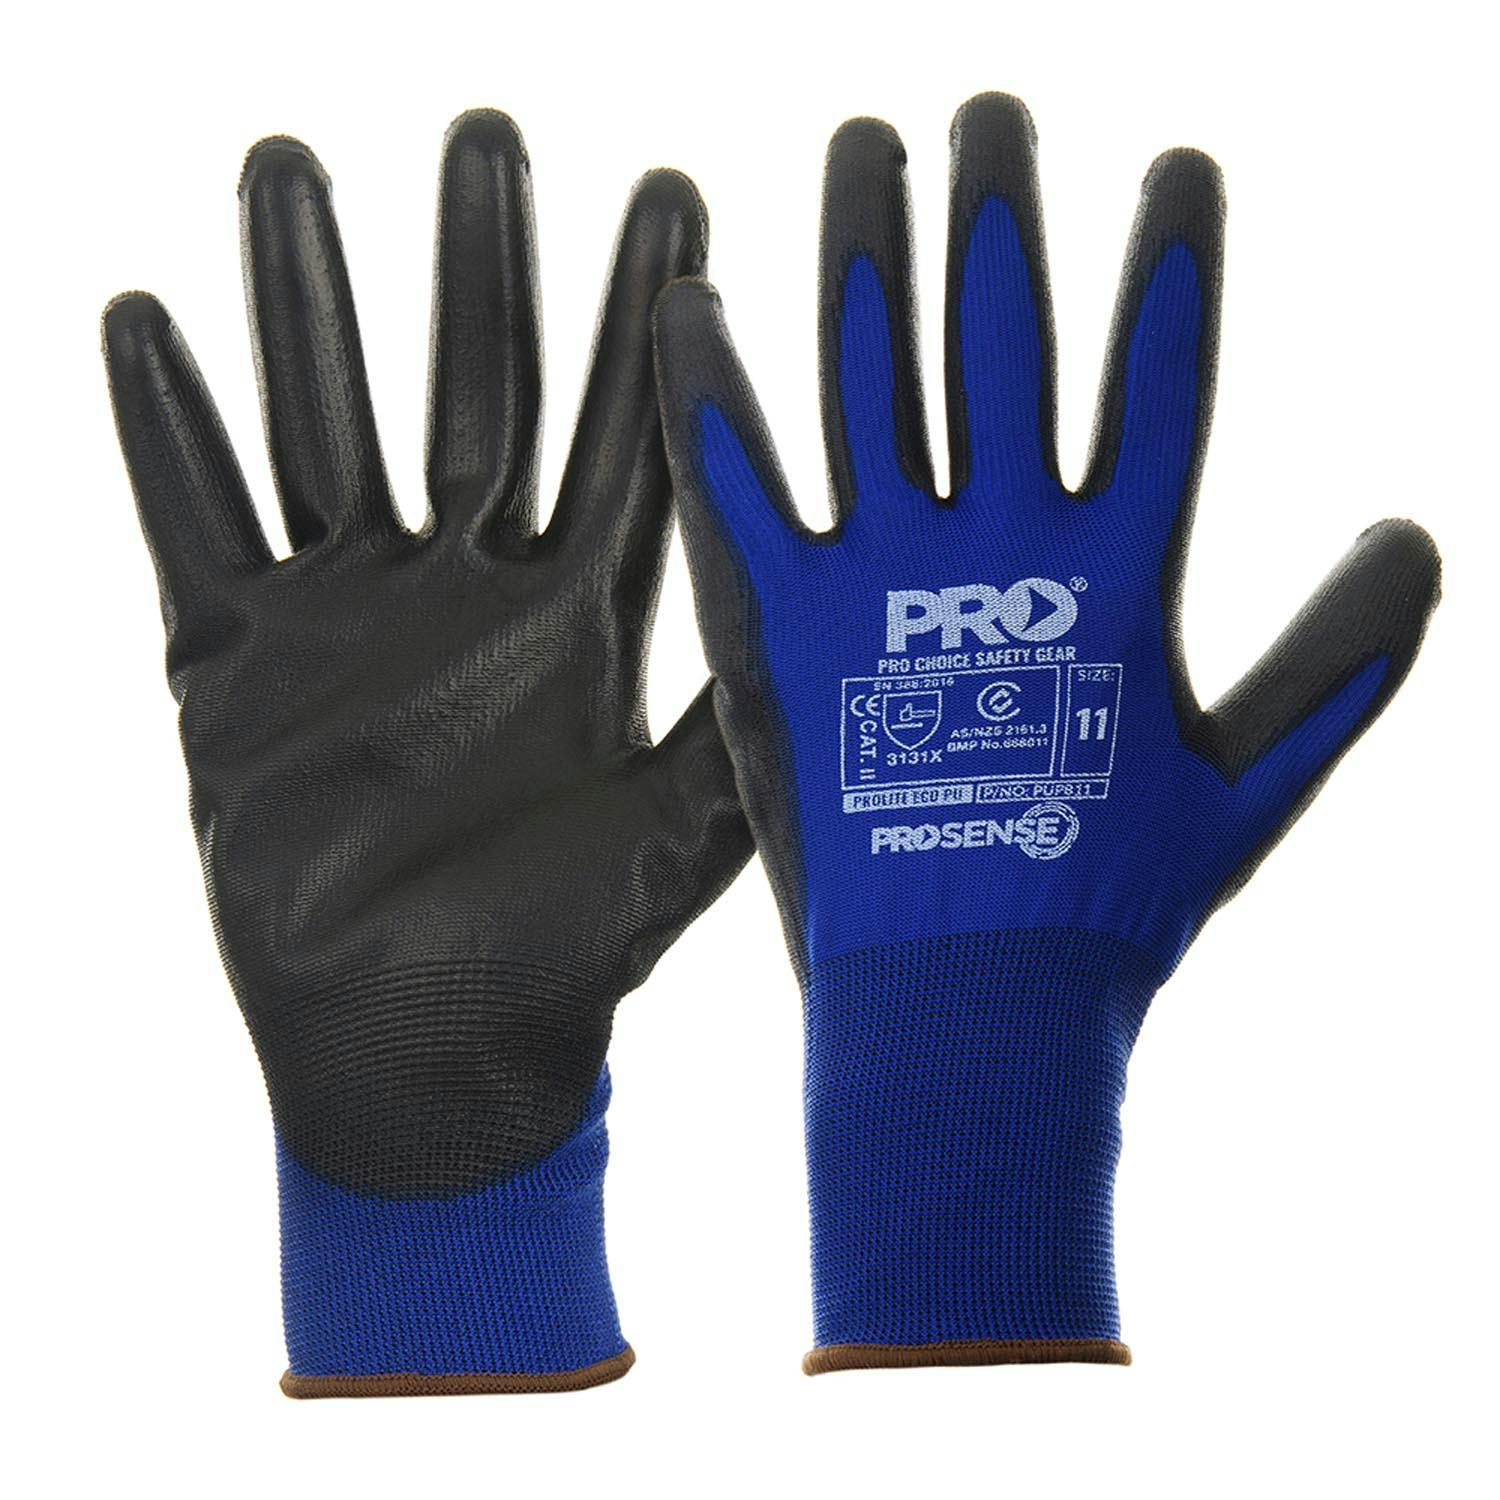 Pro Choice Prosense Prolite Eco Pu Glove 12Pr Bulk Pack_2